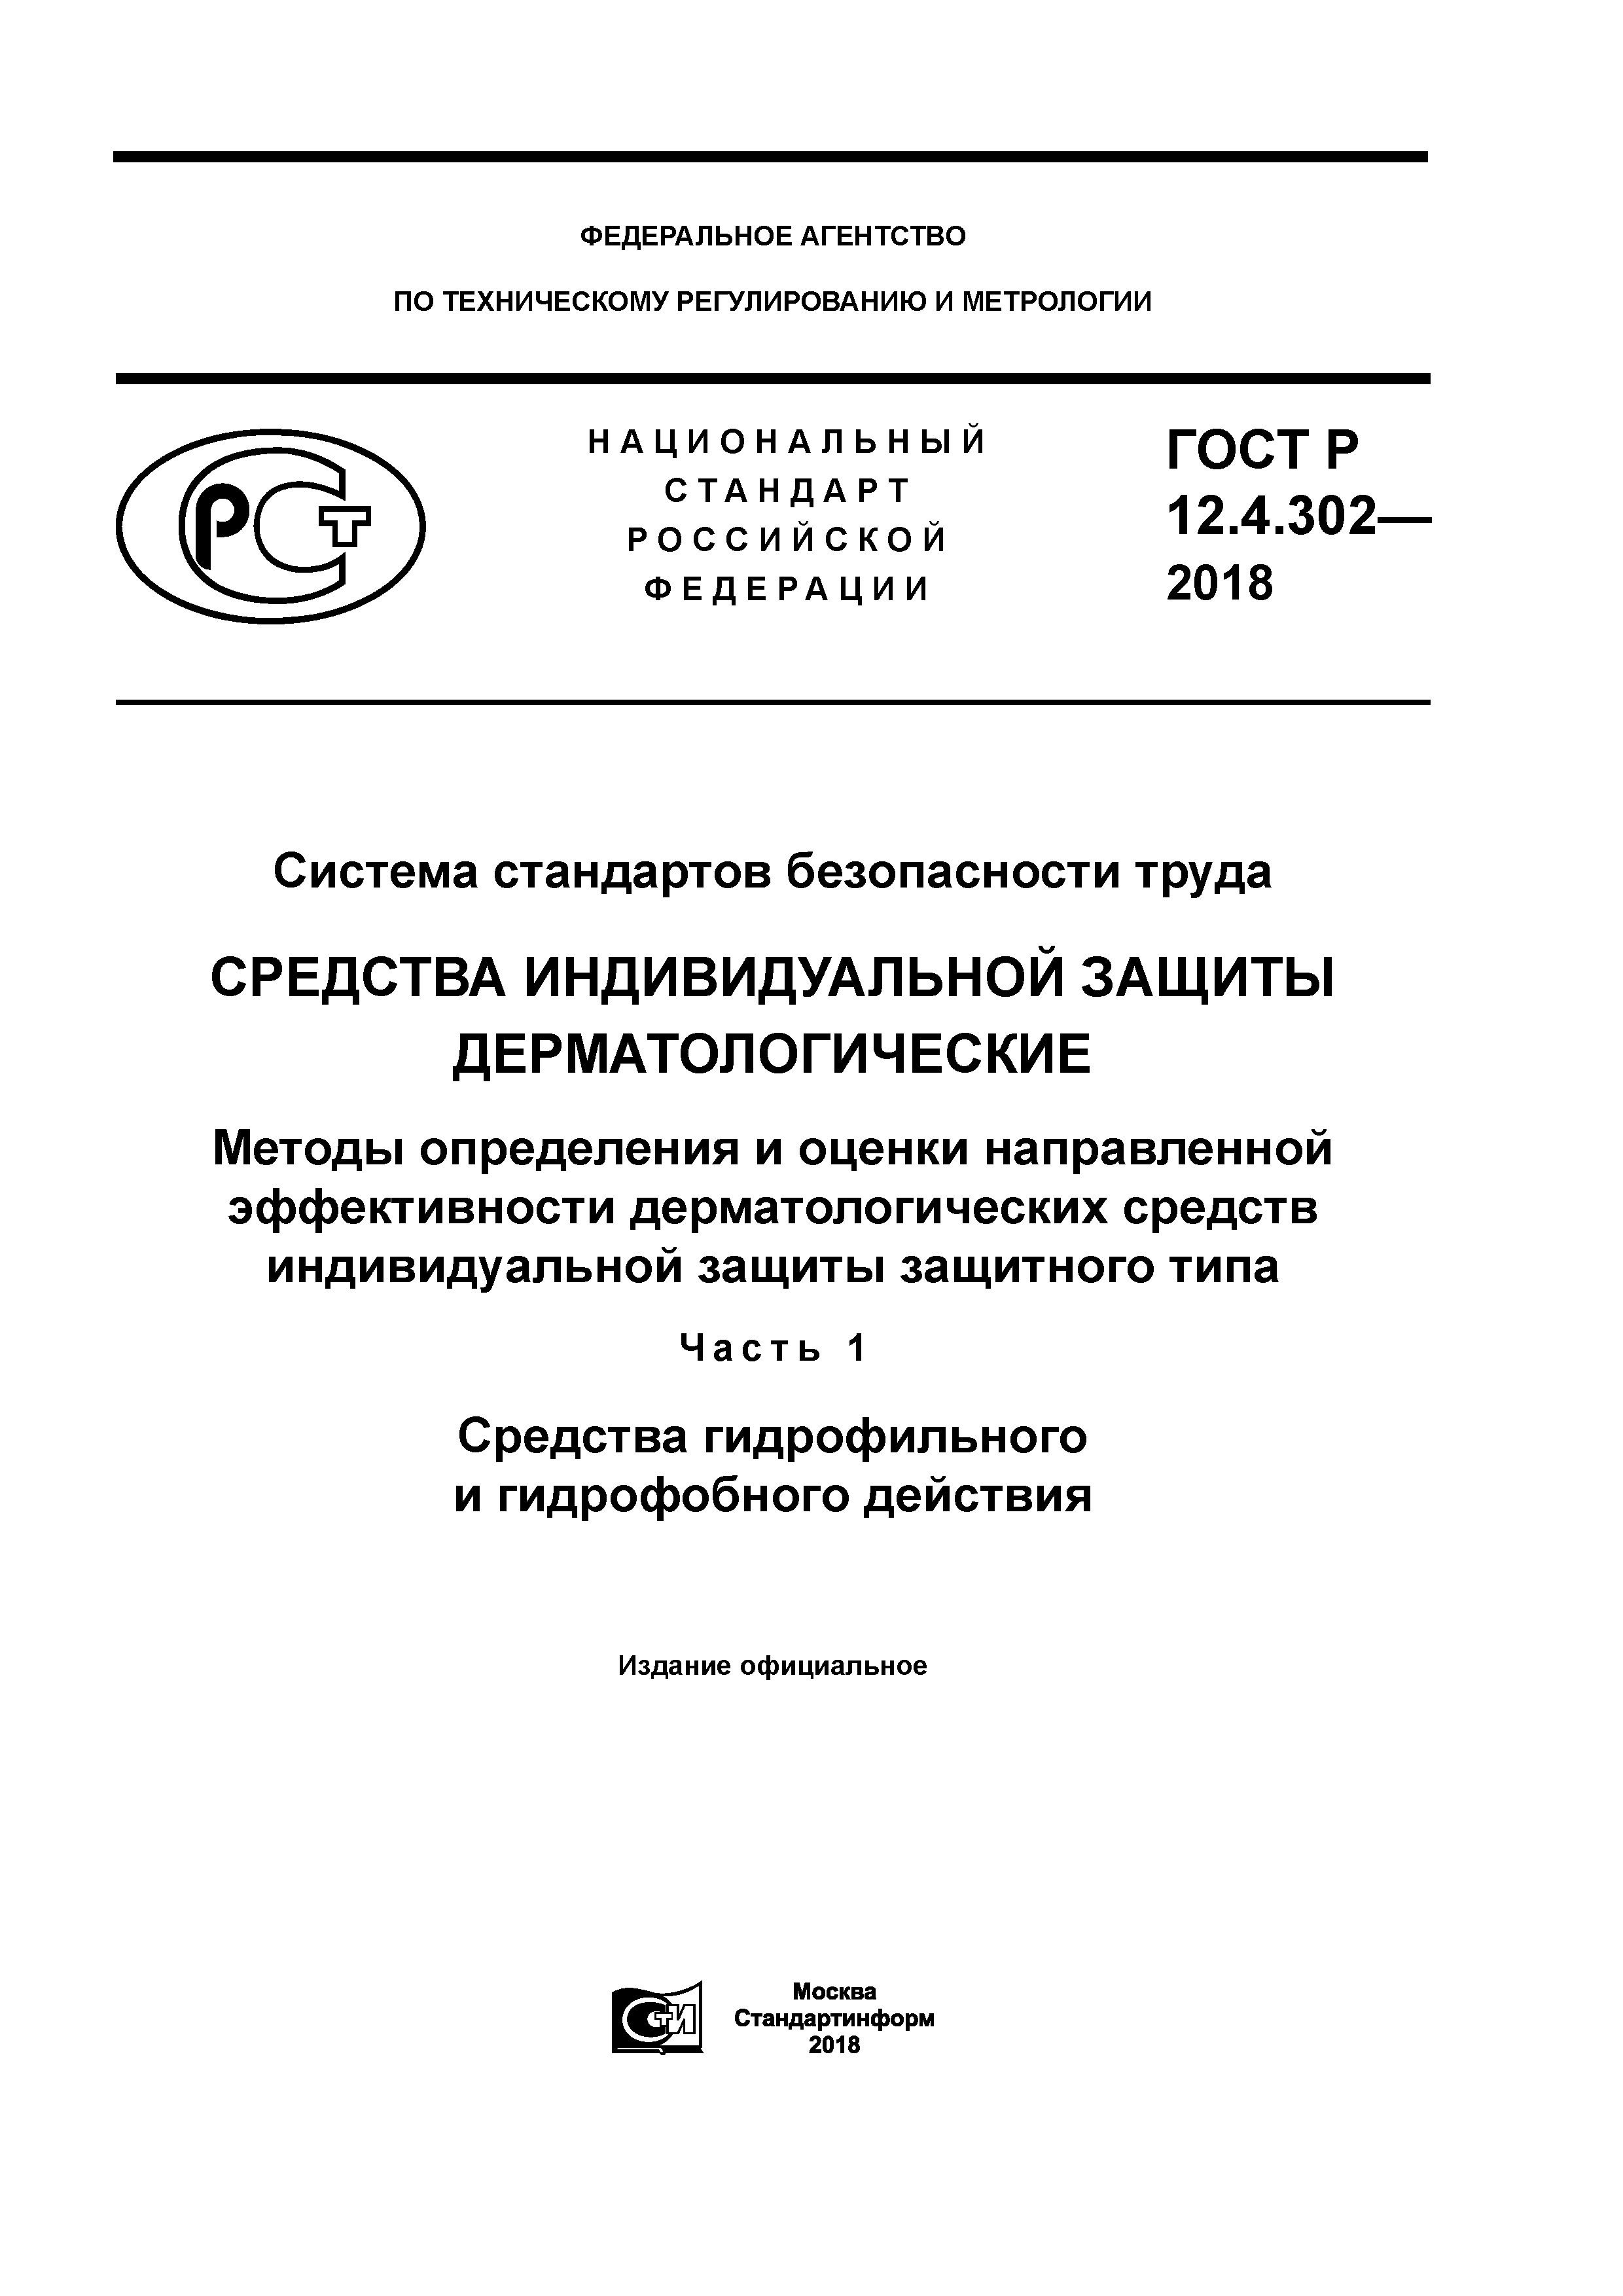 ГОСТ Р 12.4.302-2018